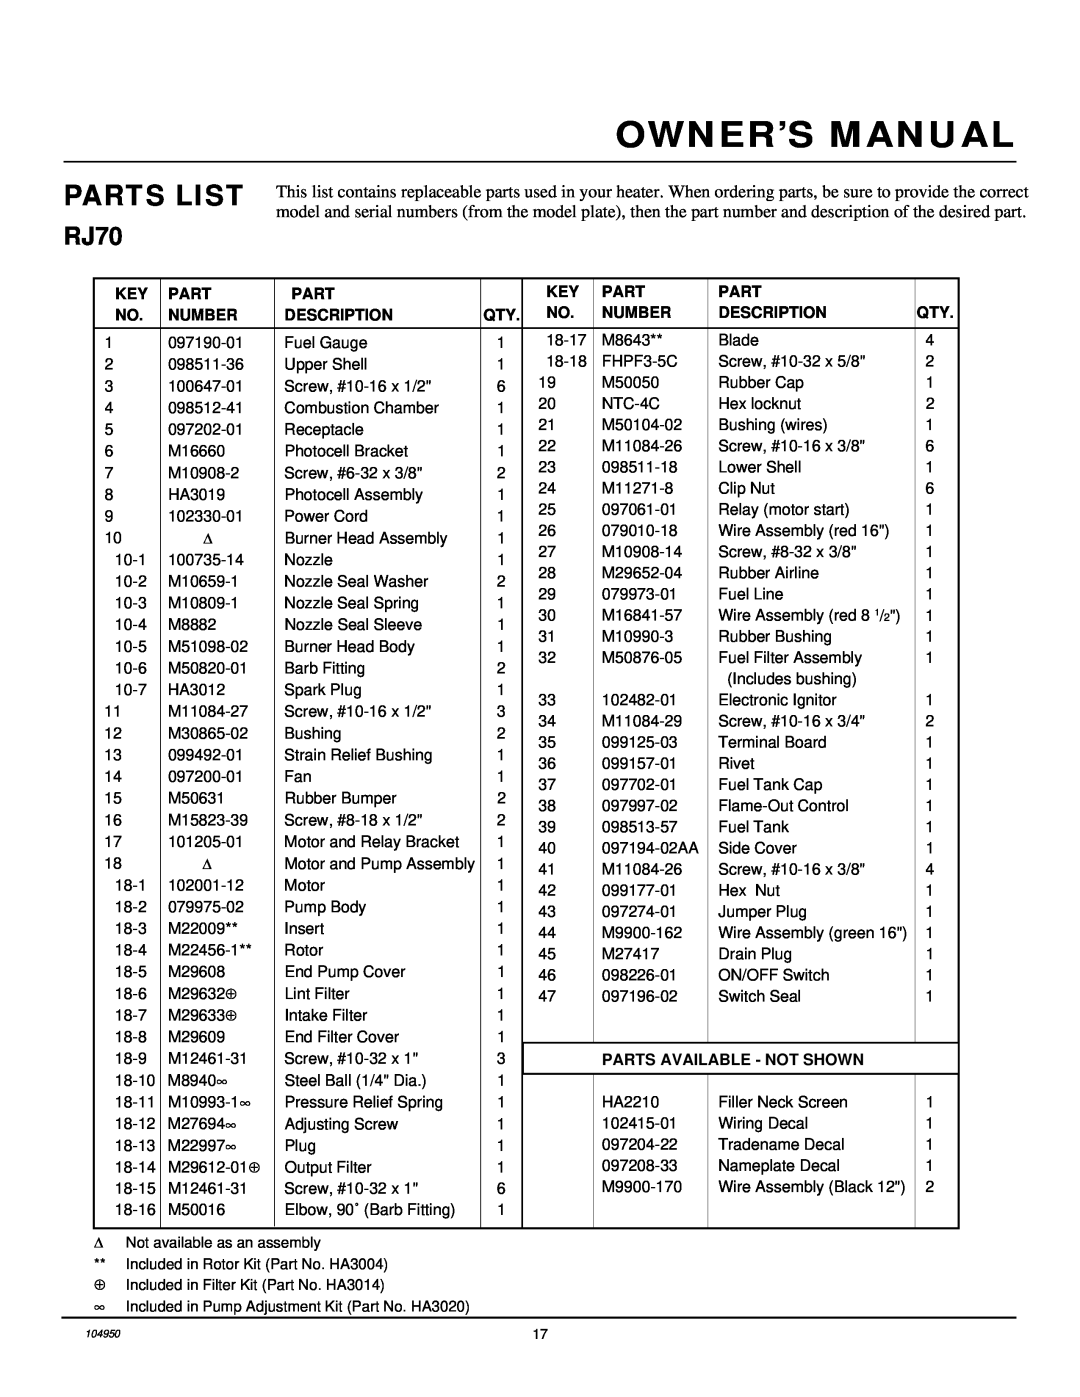 Desa RJ70, RJ45 owner manual Parts List 